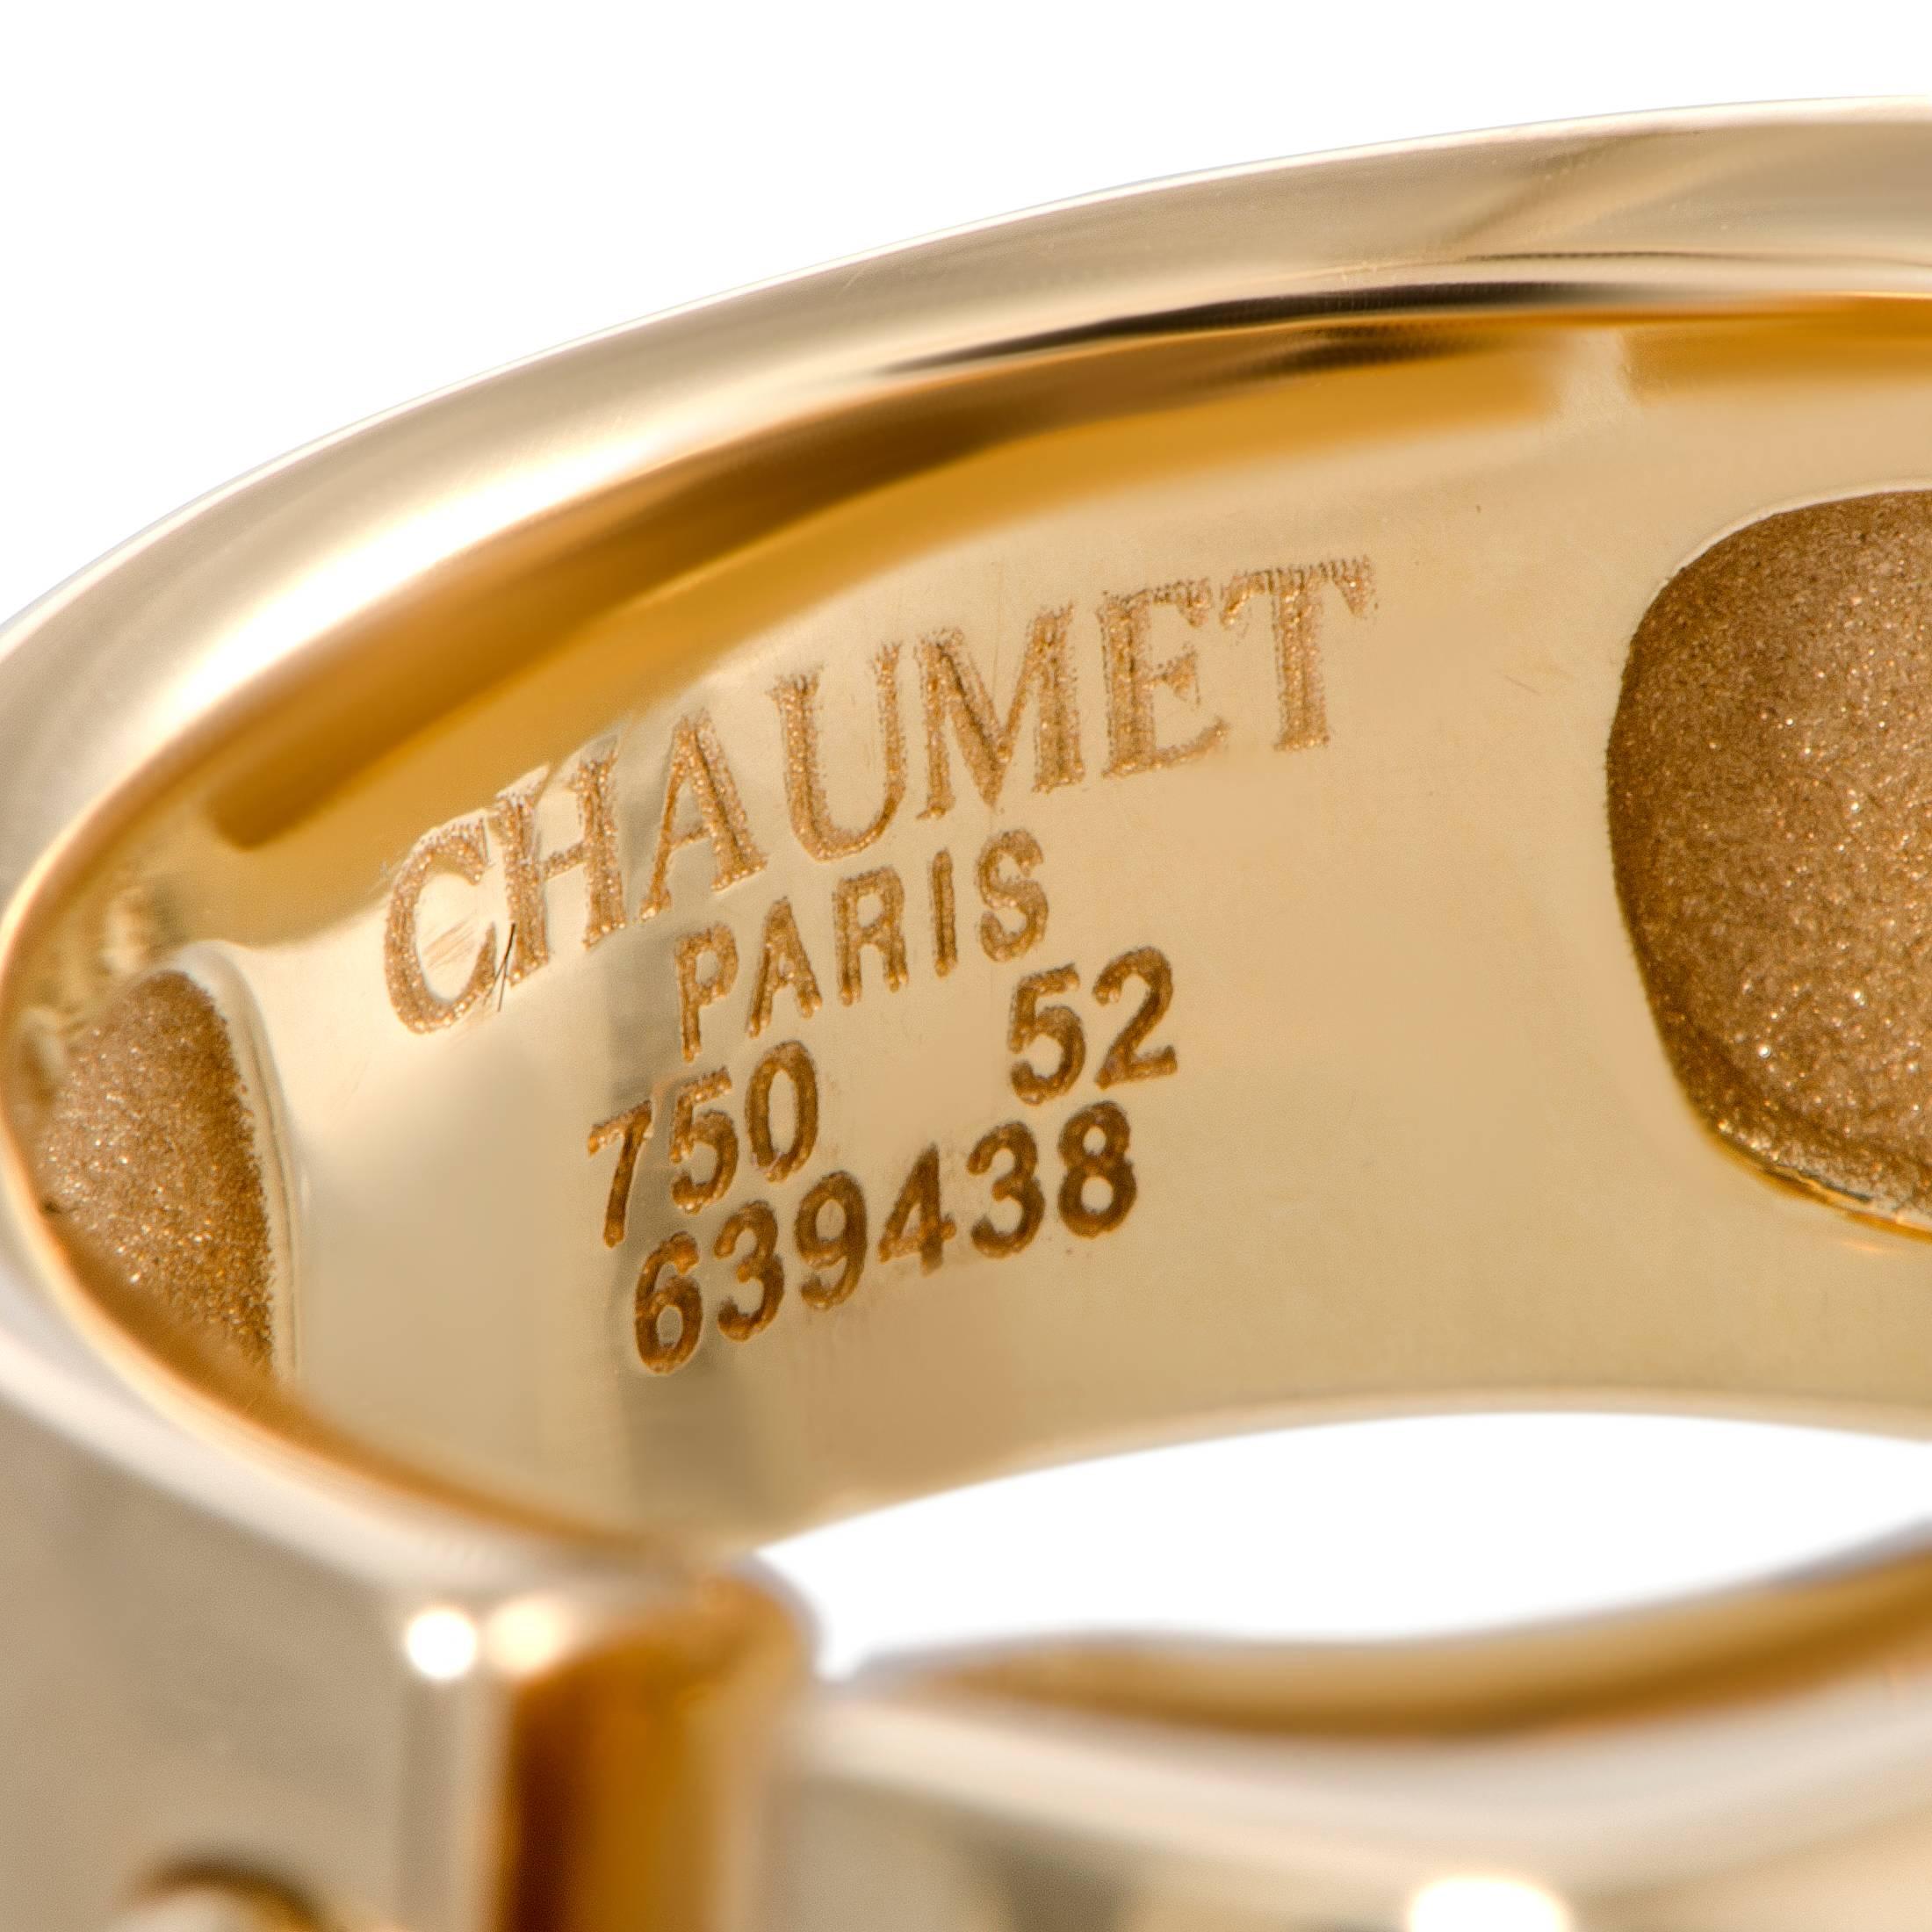 Women's Chaumet Liens Yellow Gold Smoky Quartz Cocktail Ring